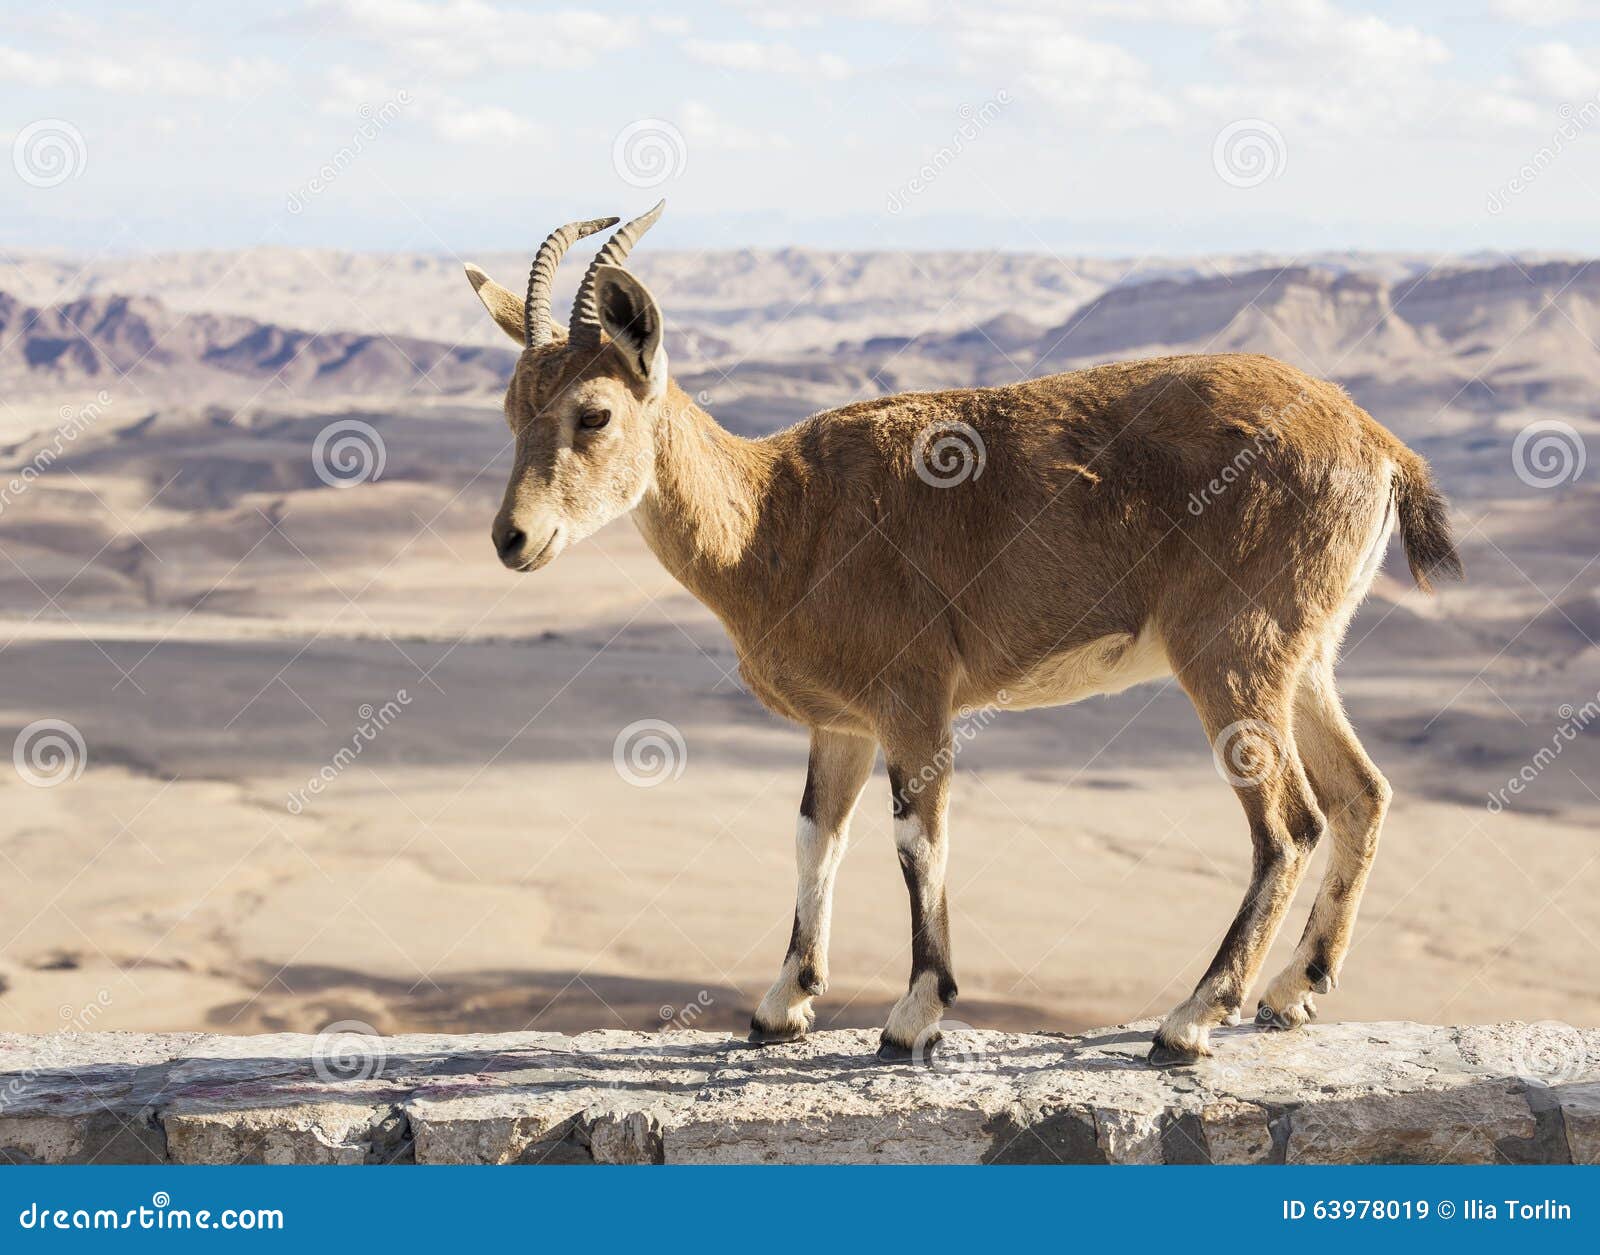 nubian ibex (capra nubiana). ramon crater. negev desert. israel